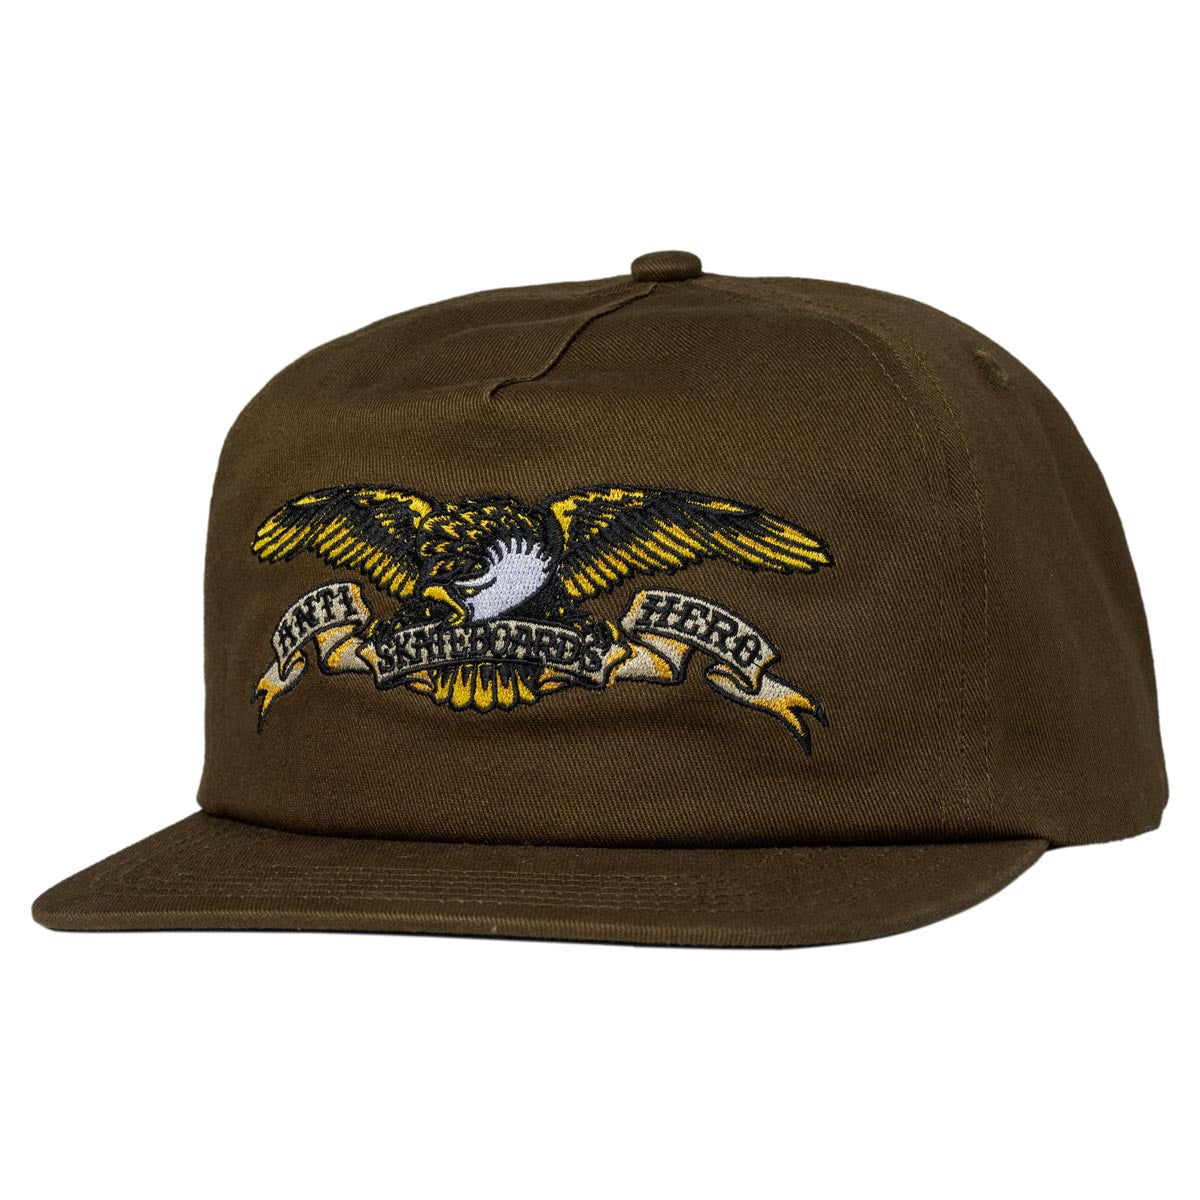 Anti-Hero Eagle Snapback Hat - Brown image 1